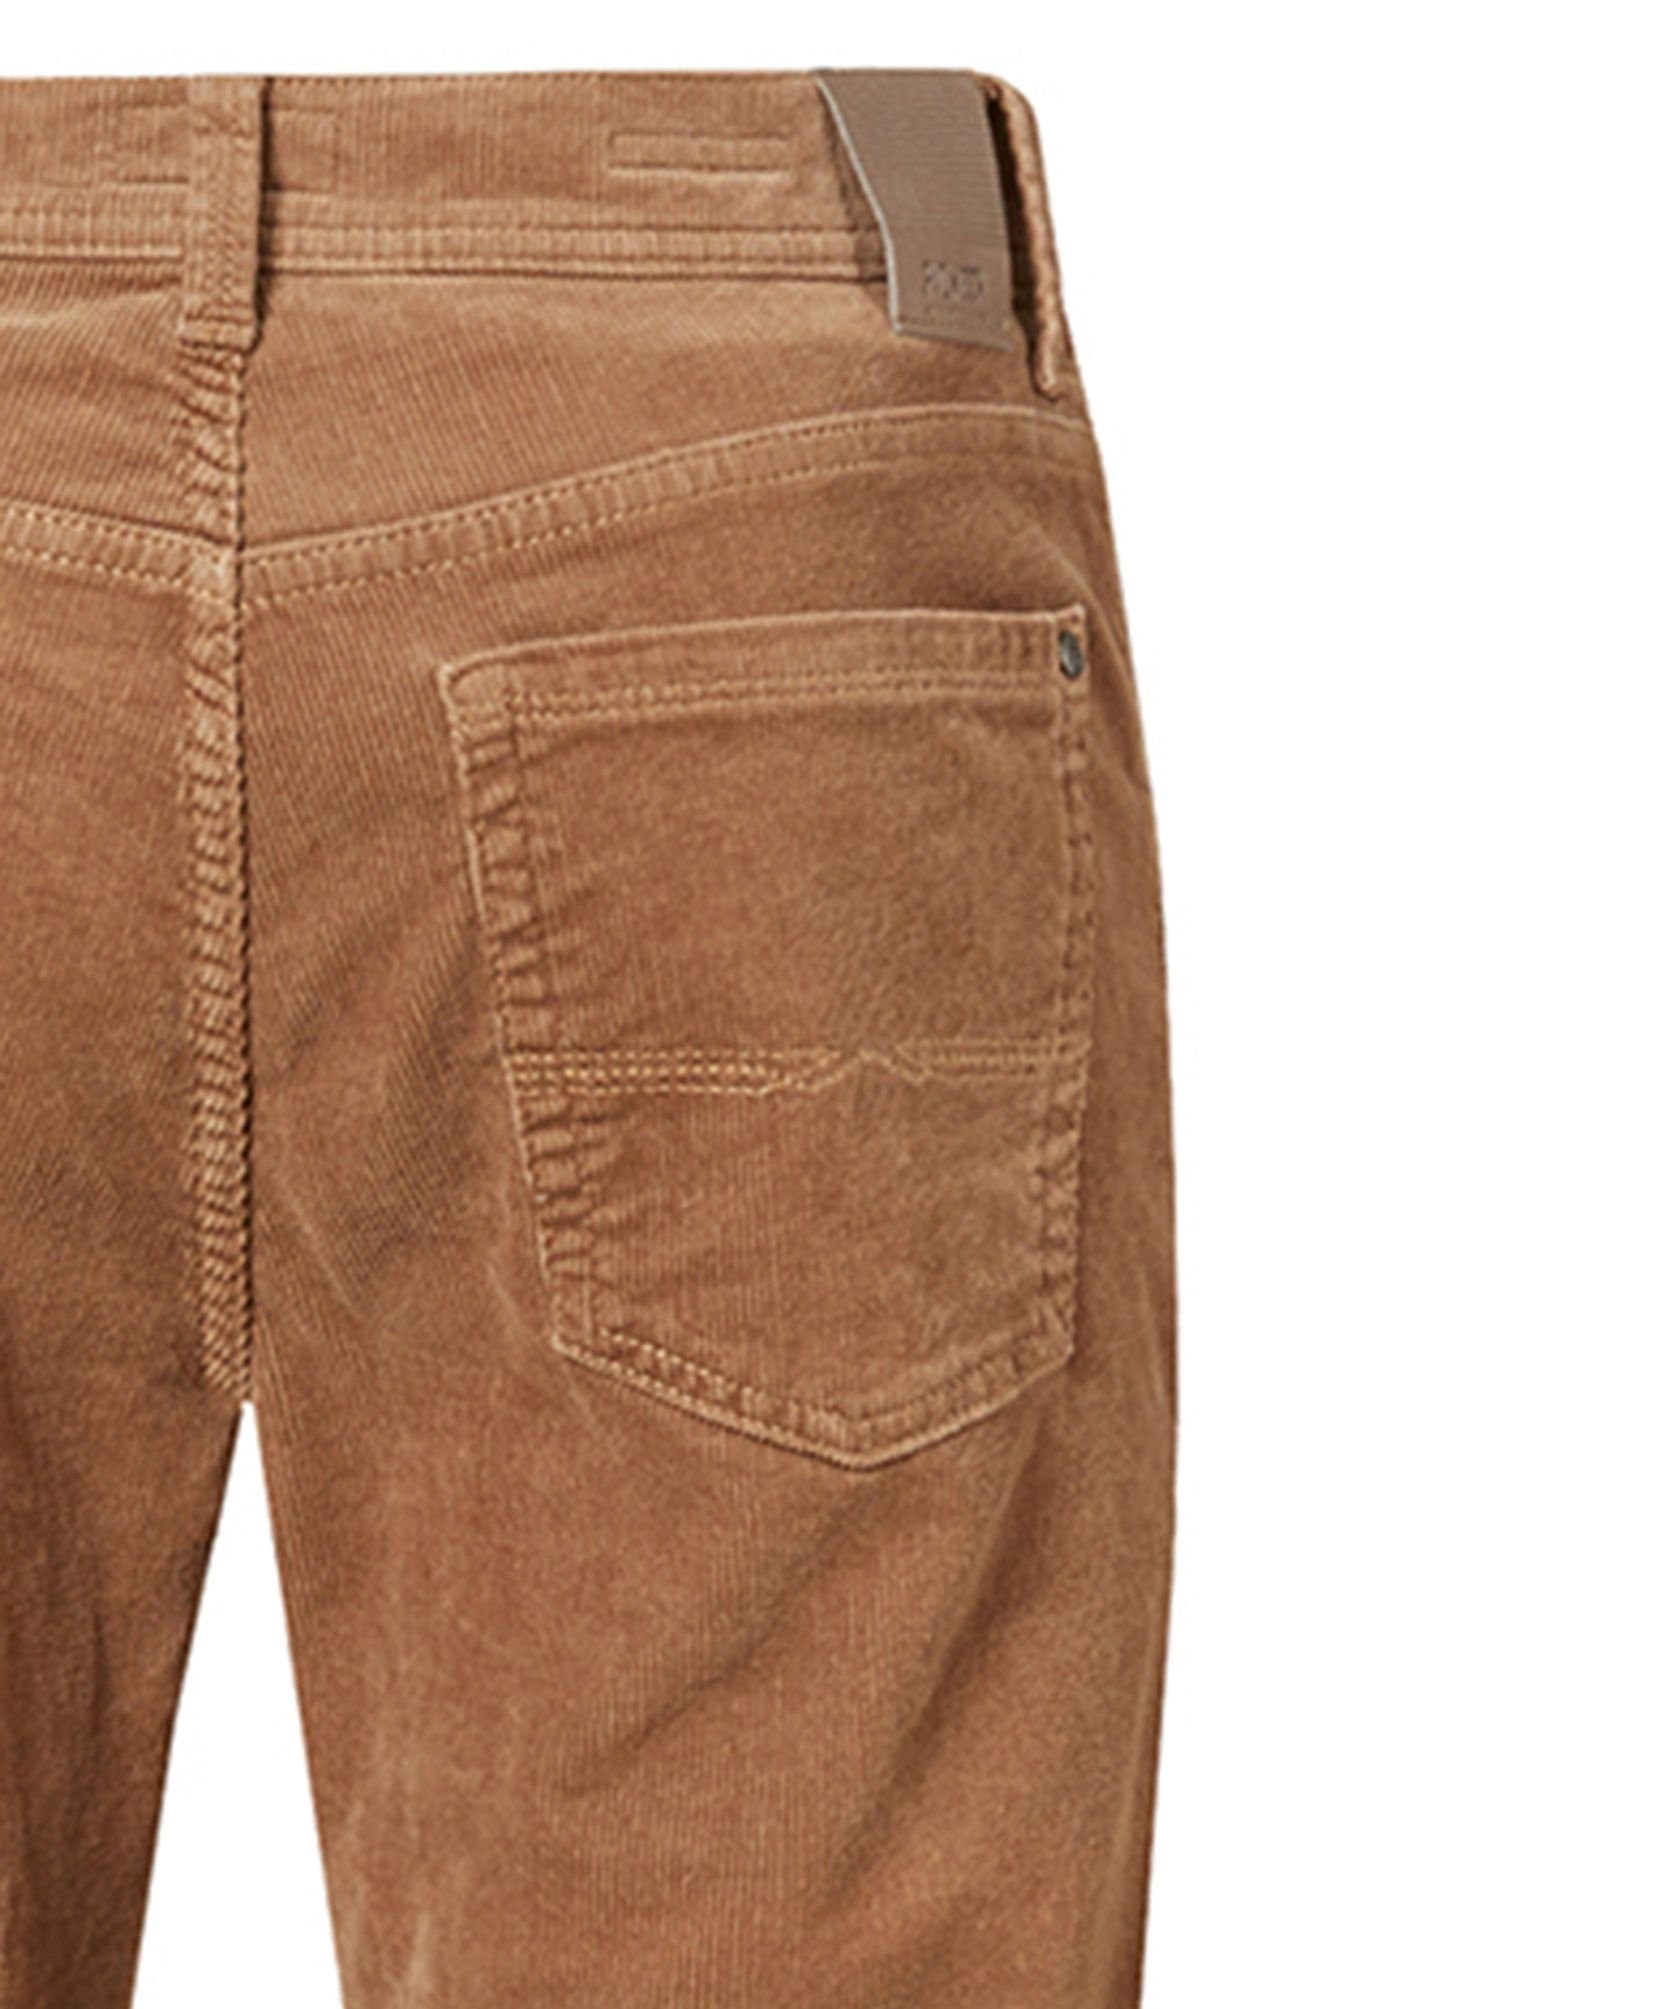 (8101) Authentic Jeans 16801.03225 Pioneer Stretchcord 5-Pocket-Jeans Teak P0